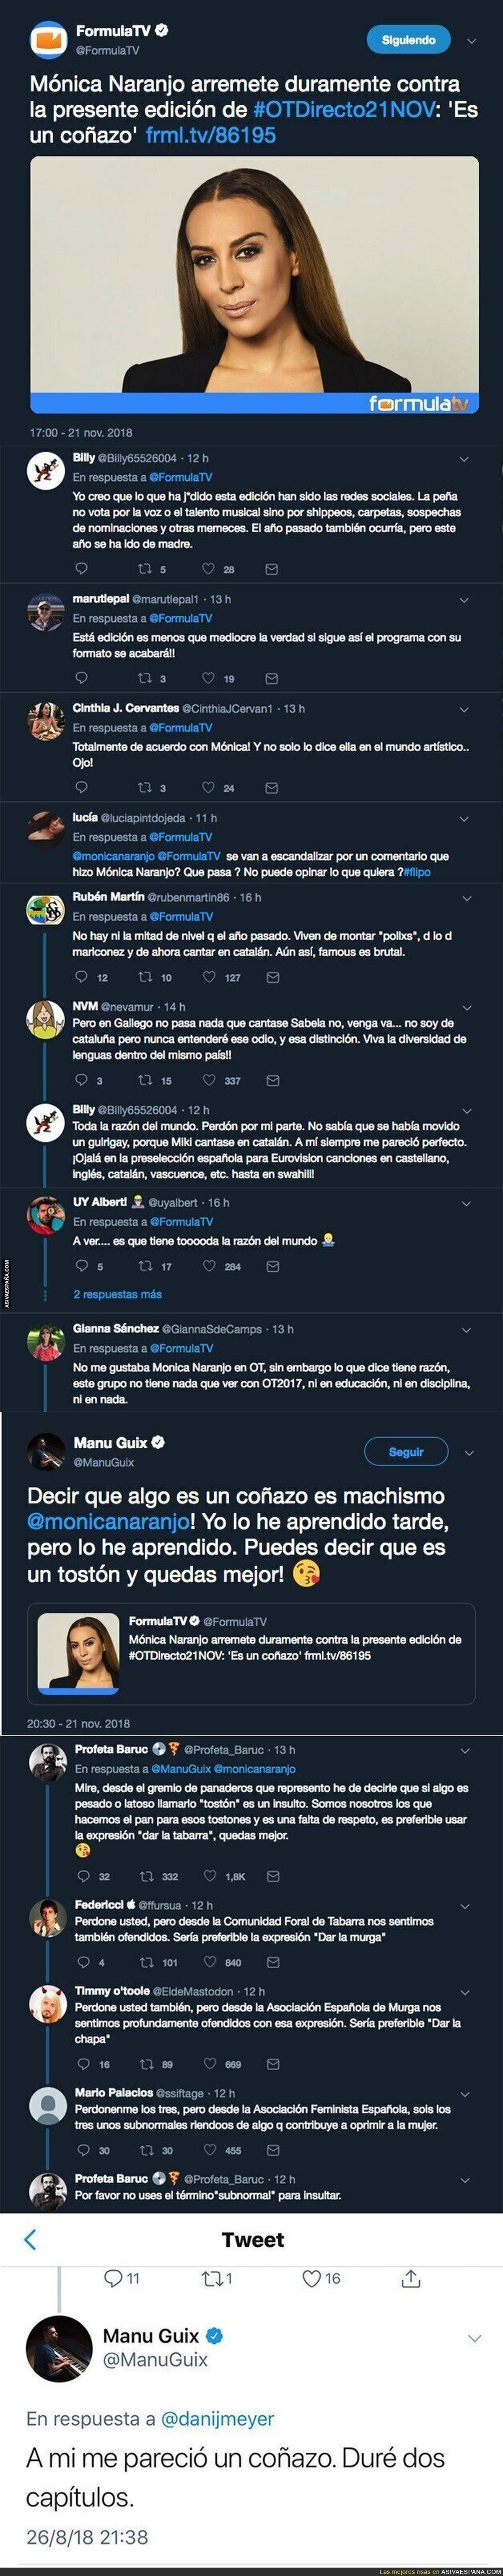 Mónica Naranjo salta a criticar a Operación Triunfo y Manu Guix sale a responder sin mucha suerte